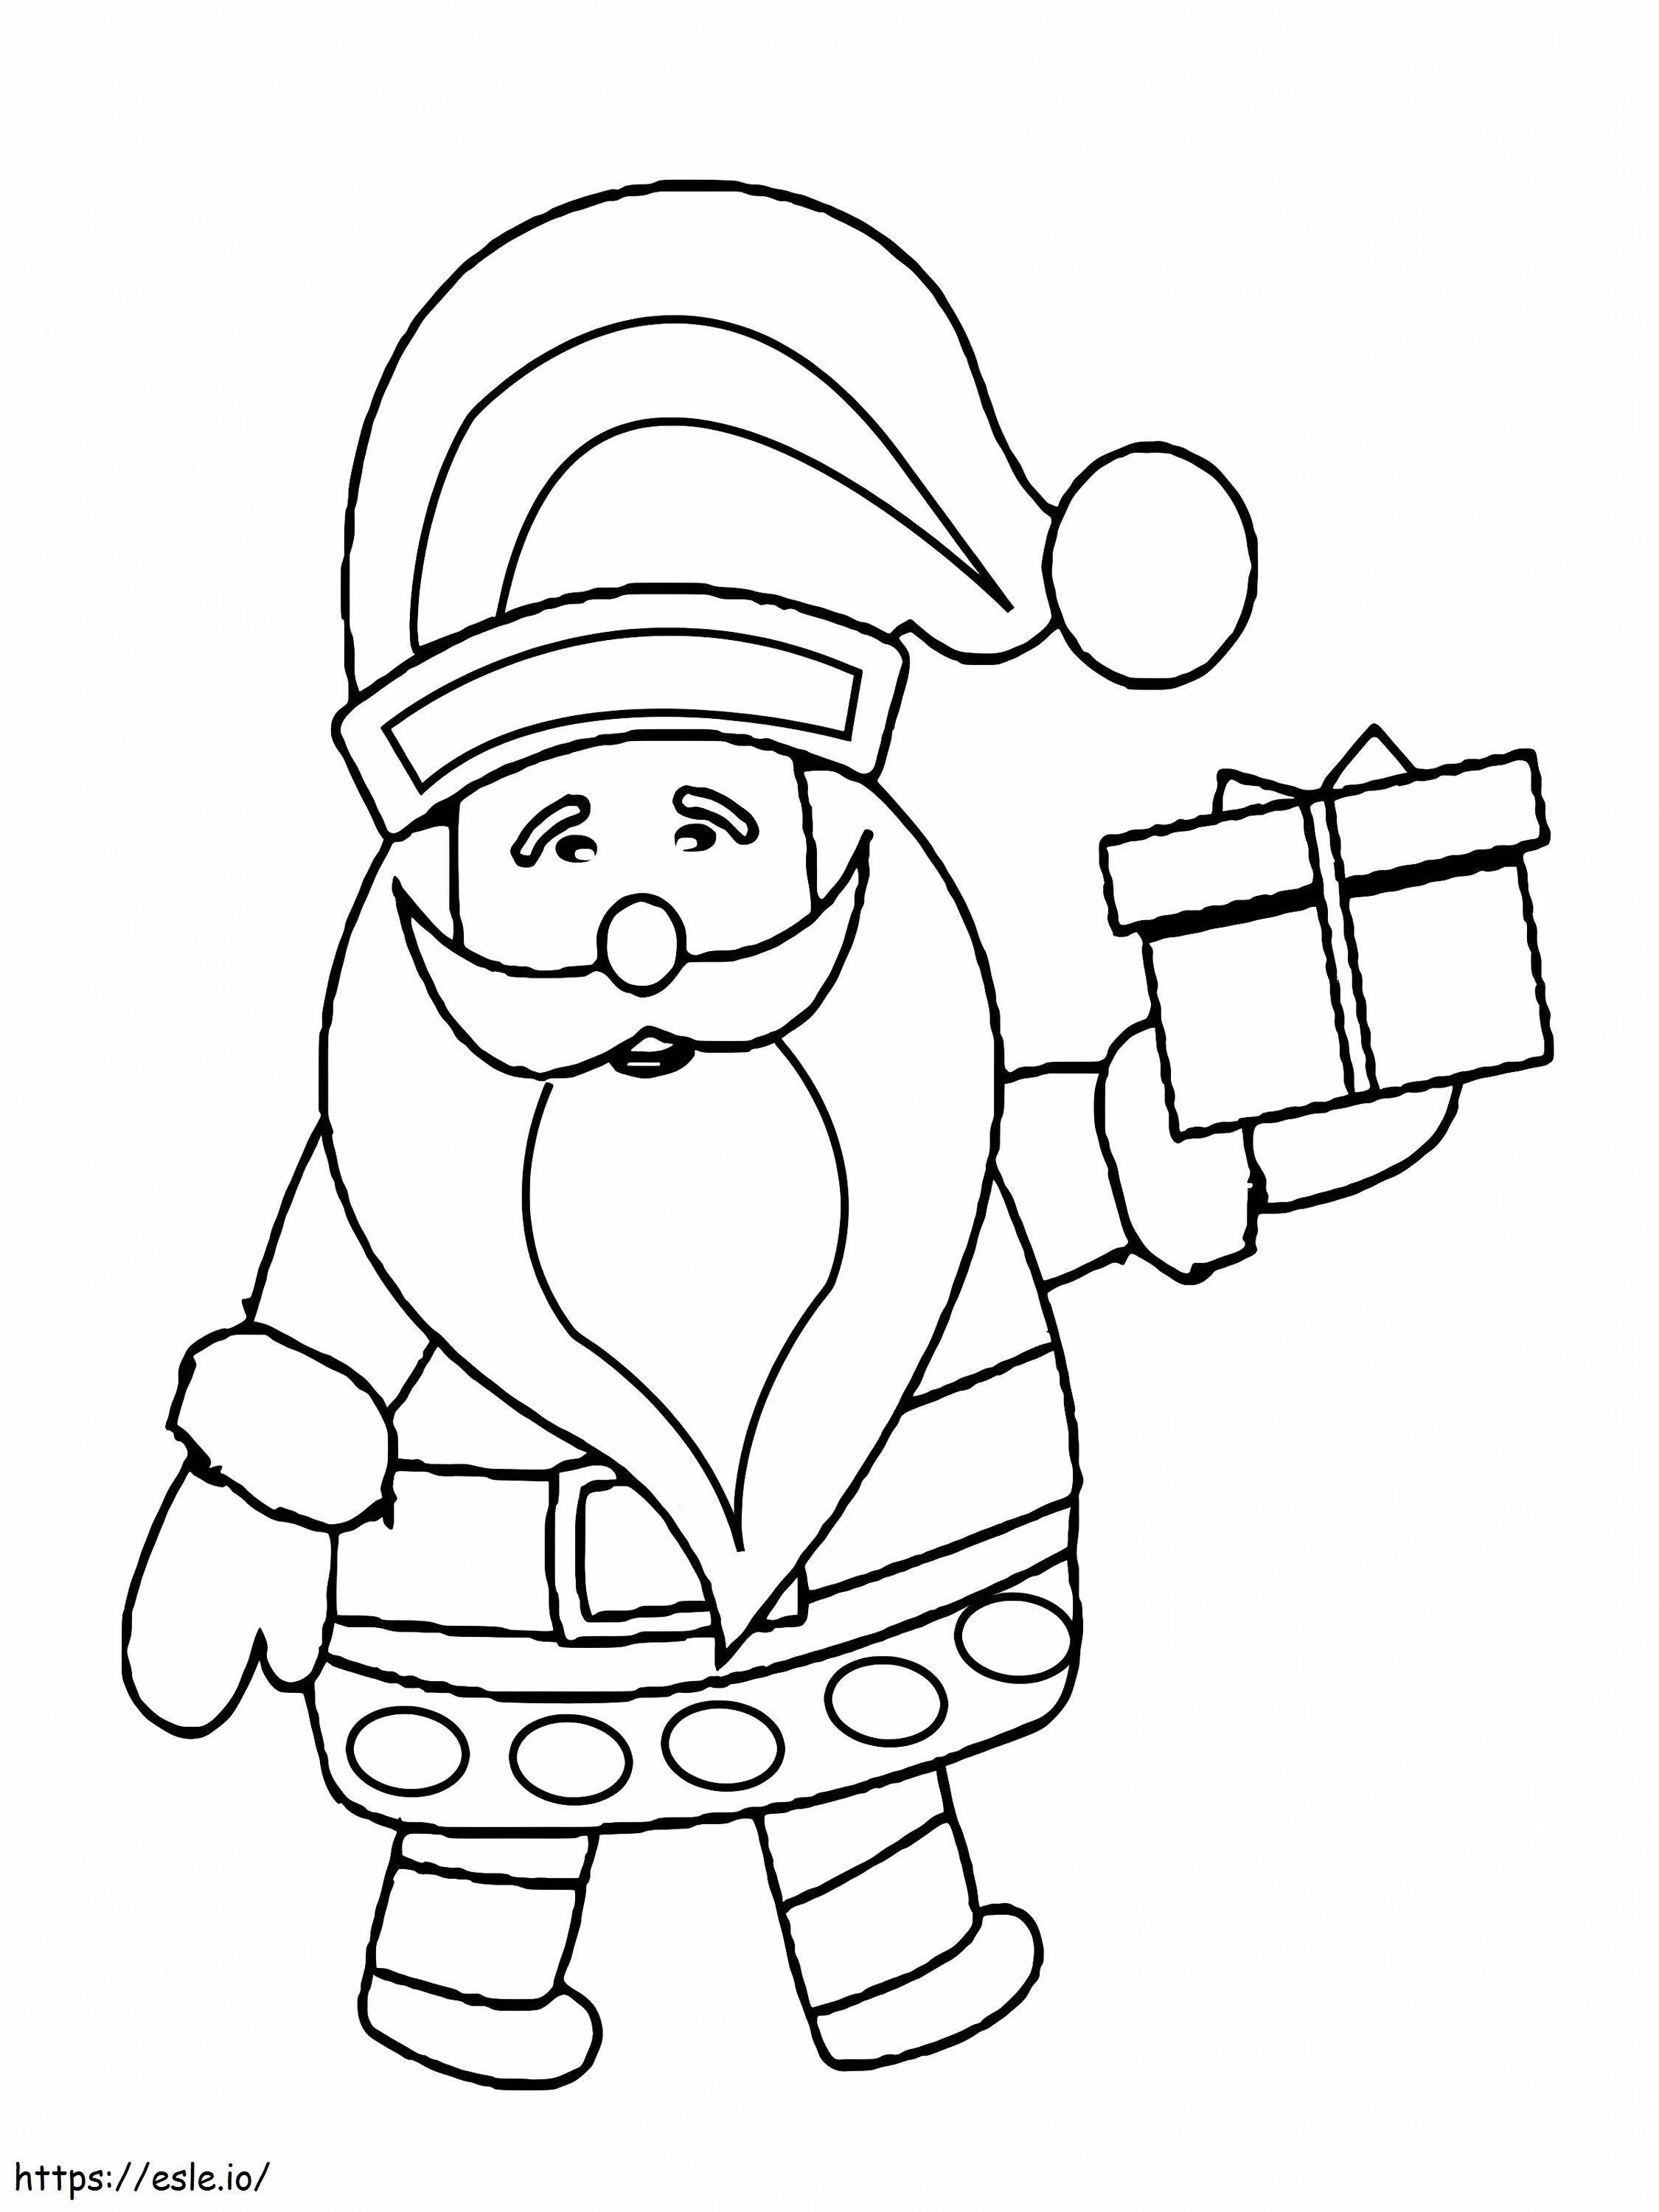 Papai Noel e um presente para colorir